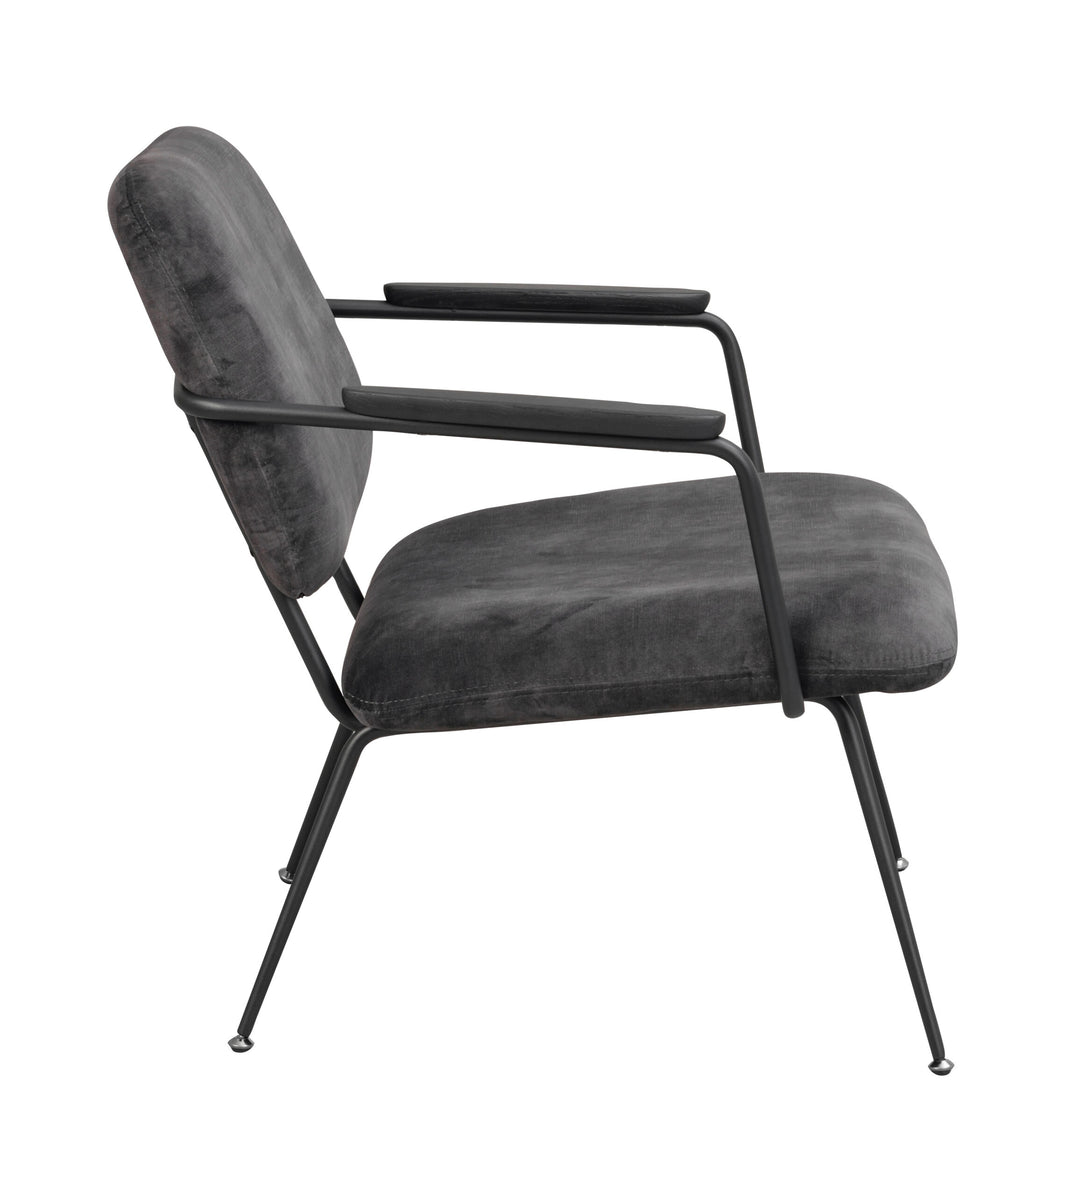 120112_c, Prescott lounge chair grey_black